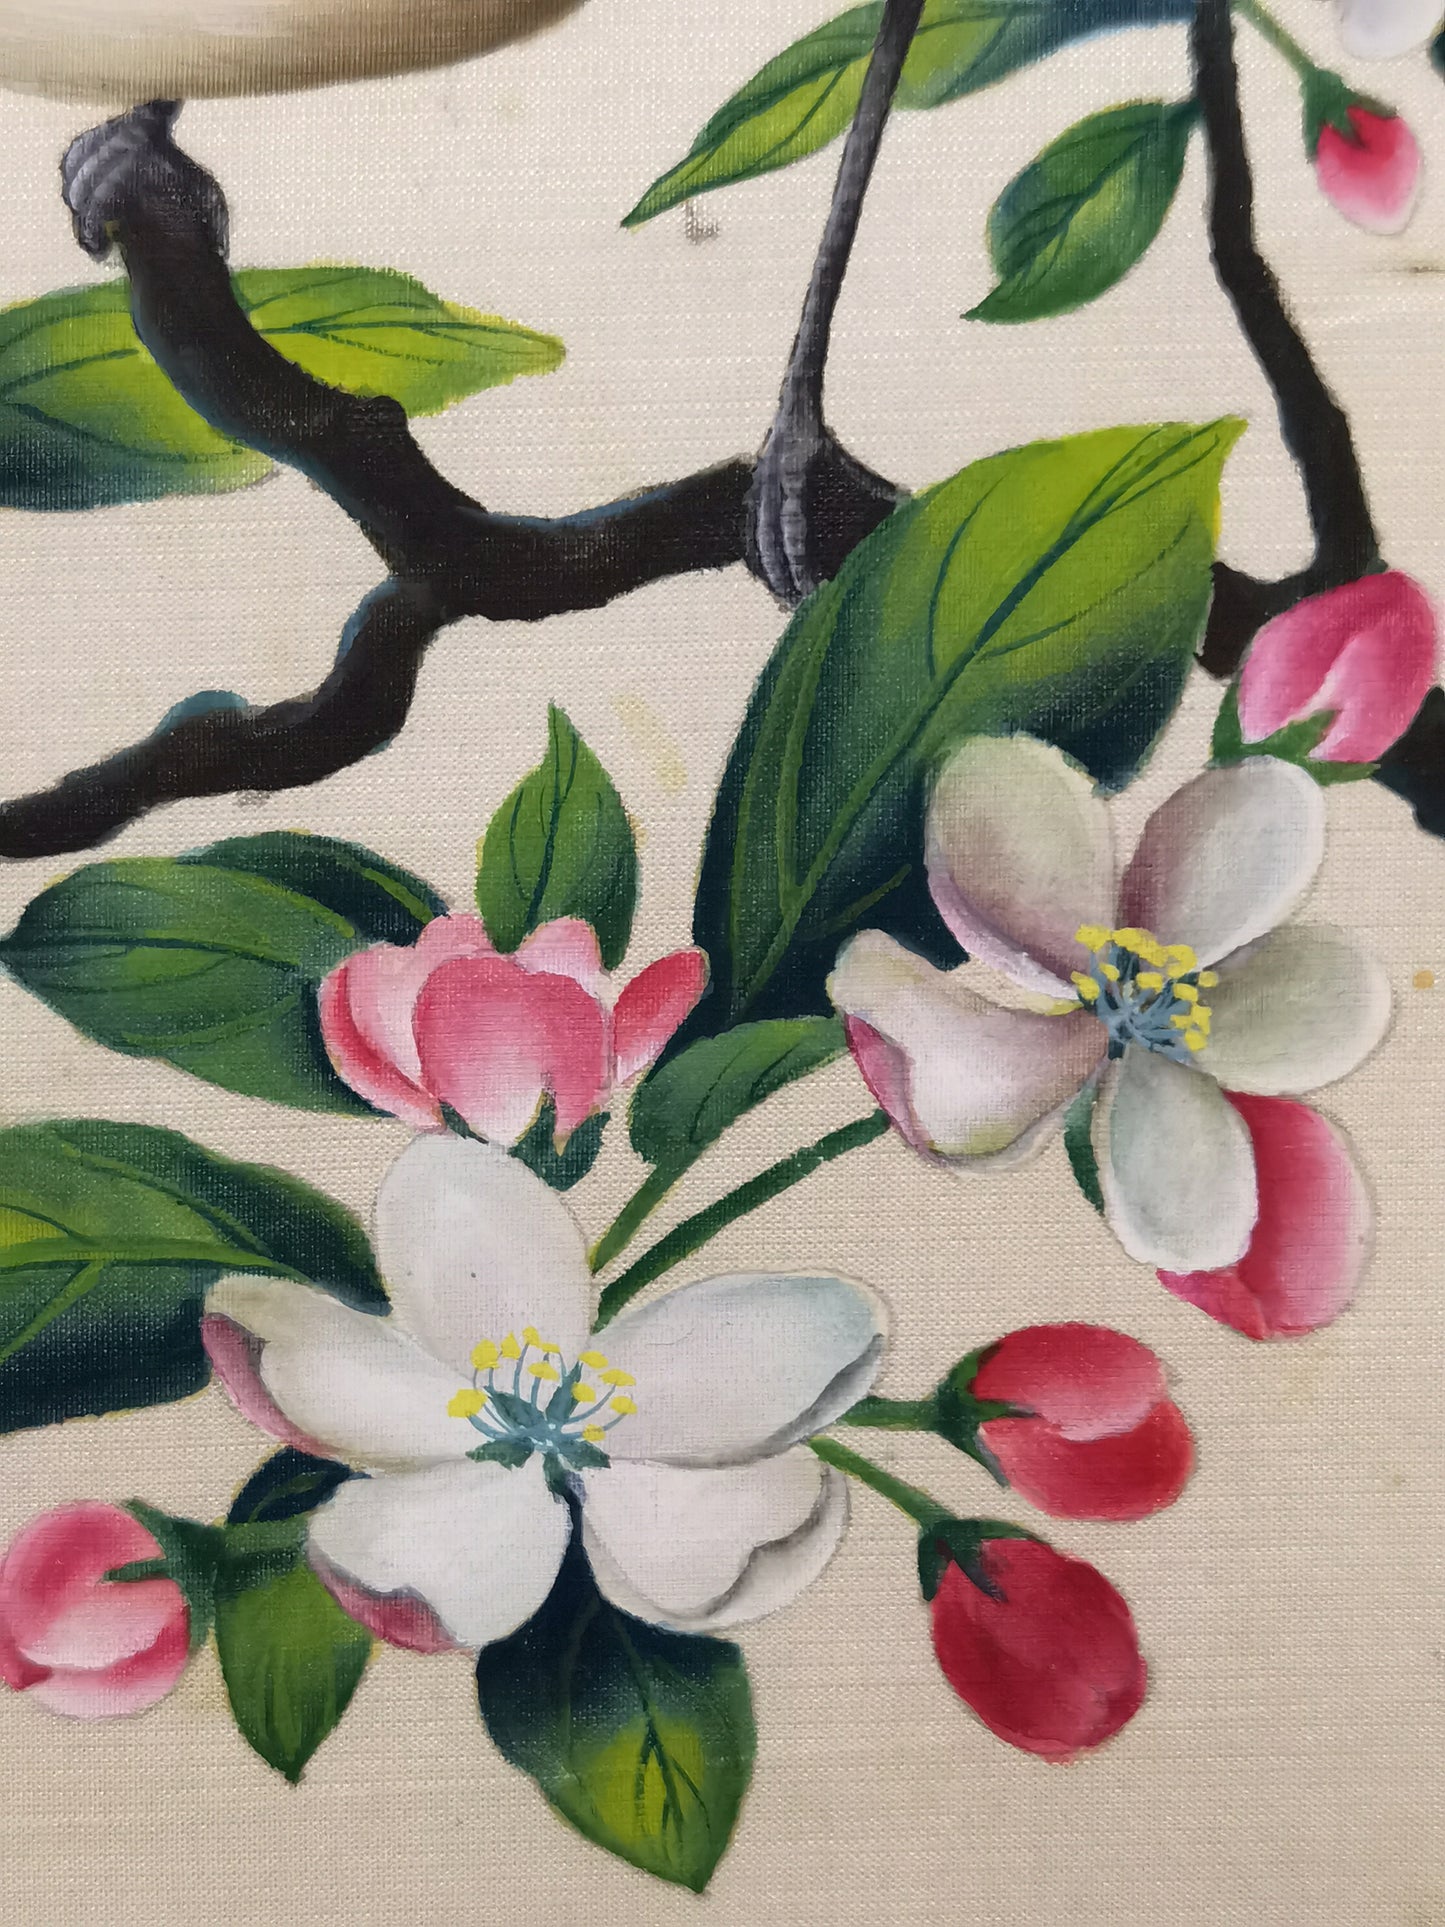 Northern Mockingbird State Bird Handmade Art Printing Arkansas Apple Blossom with Wood Frame